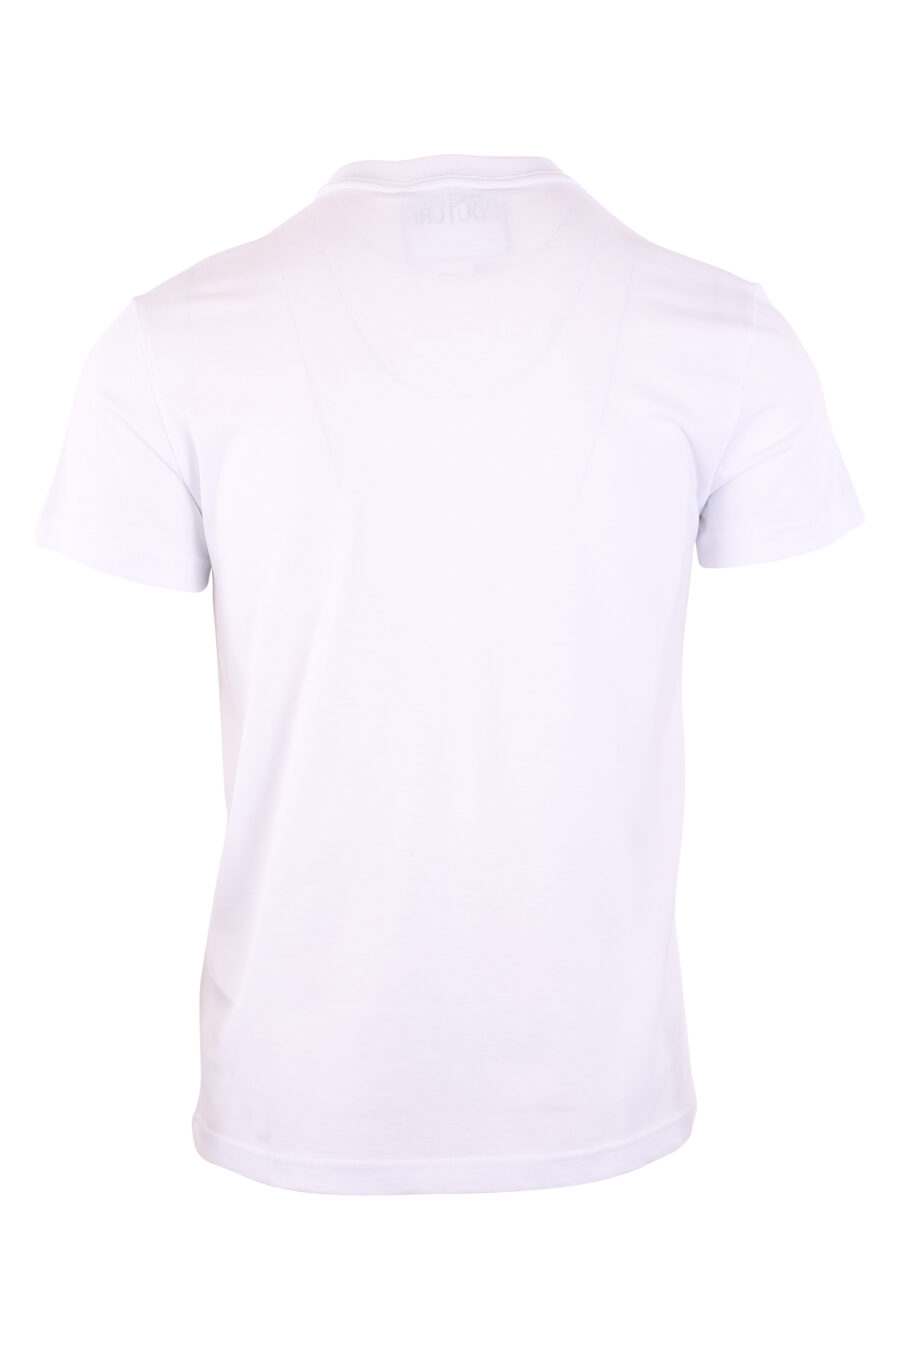 T-shirt white with black round logo small - IMG 3116